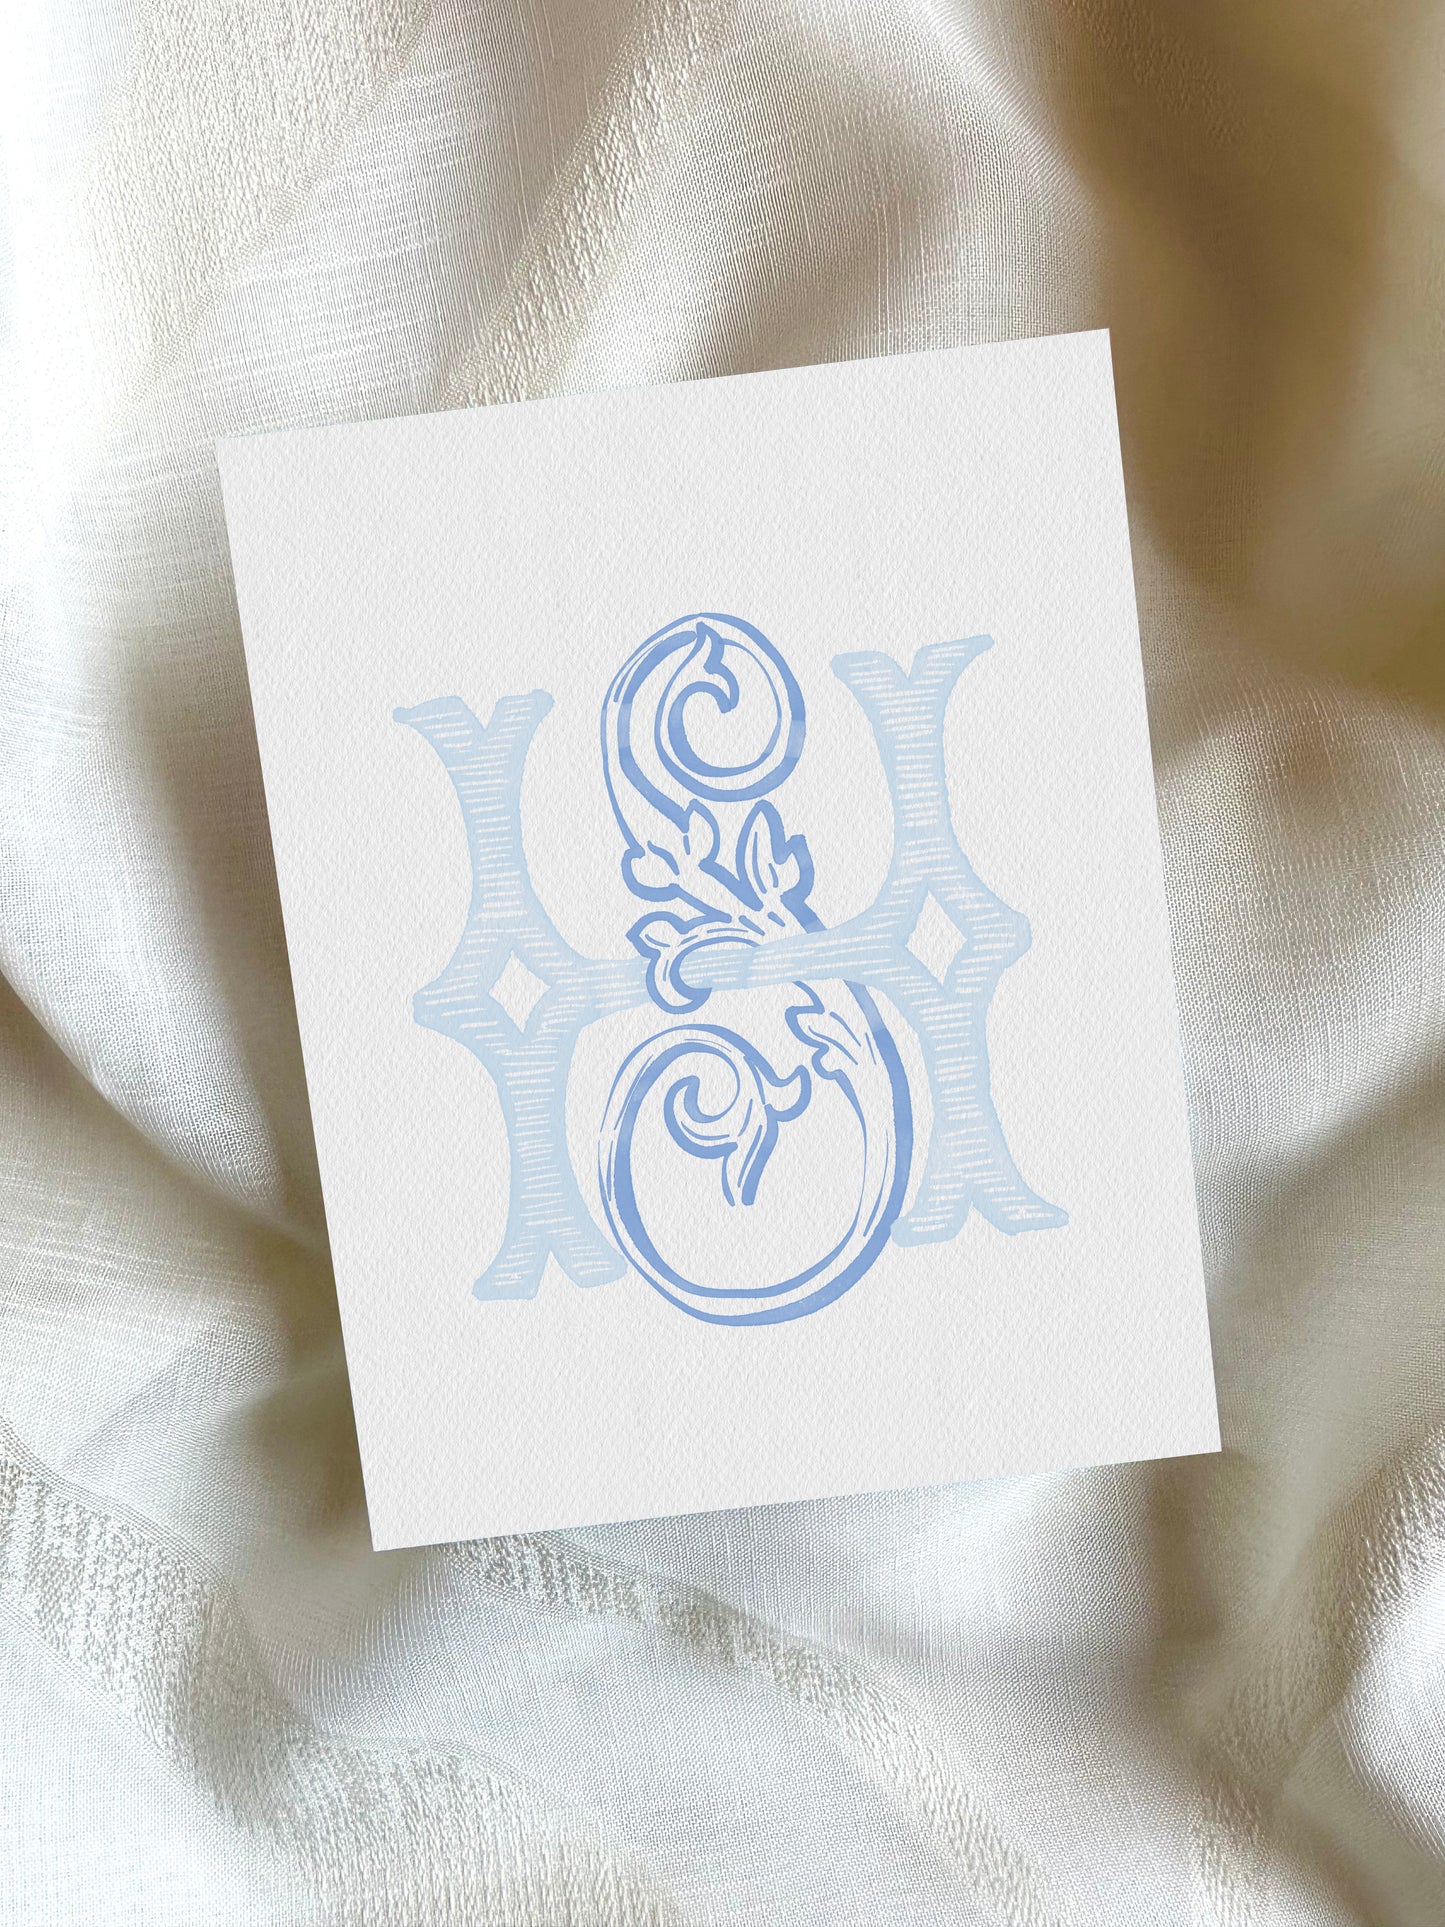 2 Letter Monogram with Letters HS SH | Digital Download - Wedding Monogram SVG, Personal Logo, Wedding Logo for Wedding Invitations The Wedding Crest Lab